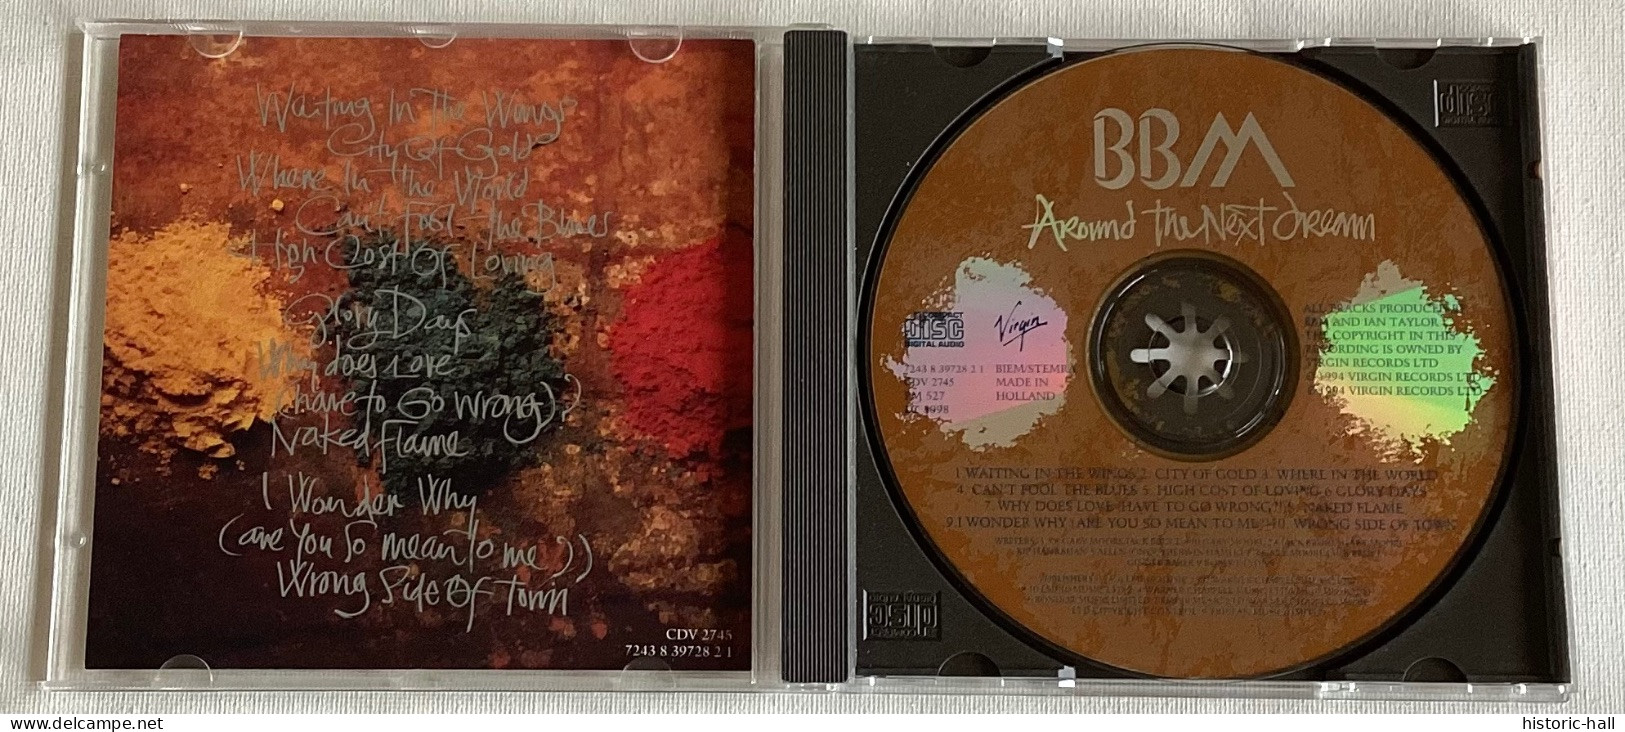 BBM (Gary Moore) - Around The Next Dream - CD - 1994 - Holland Press - Blues